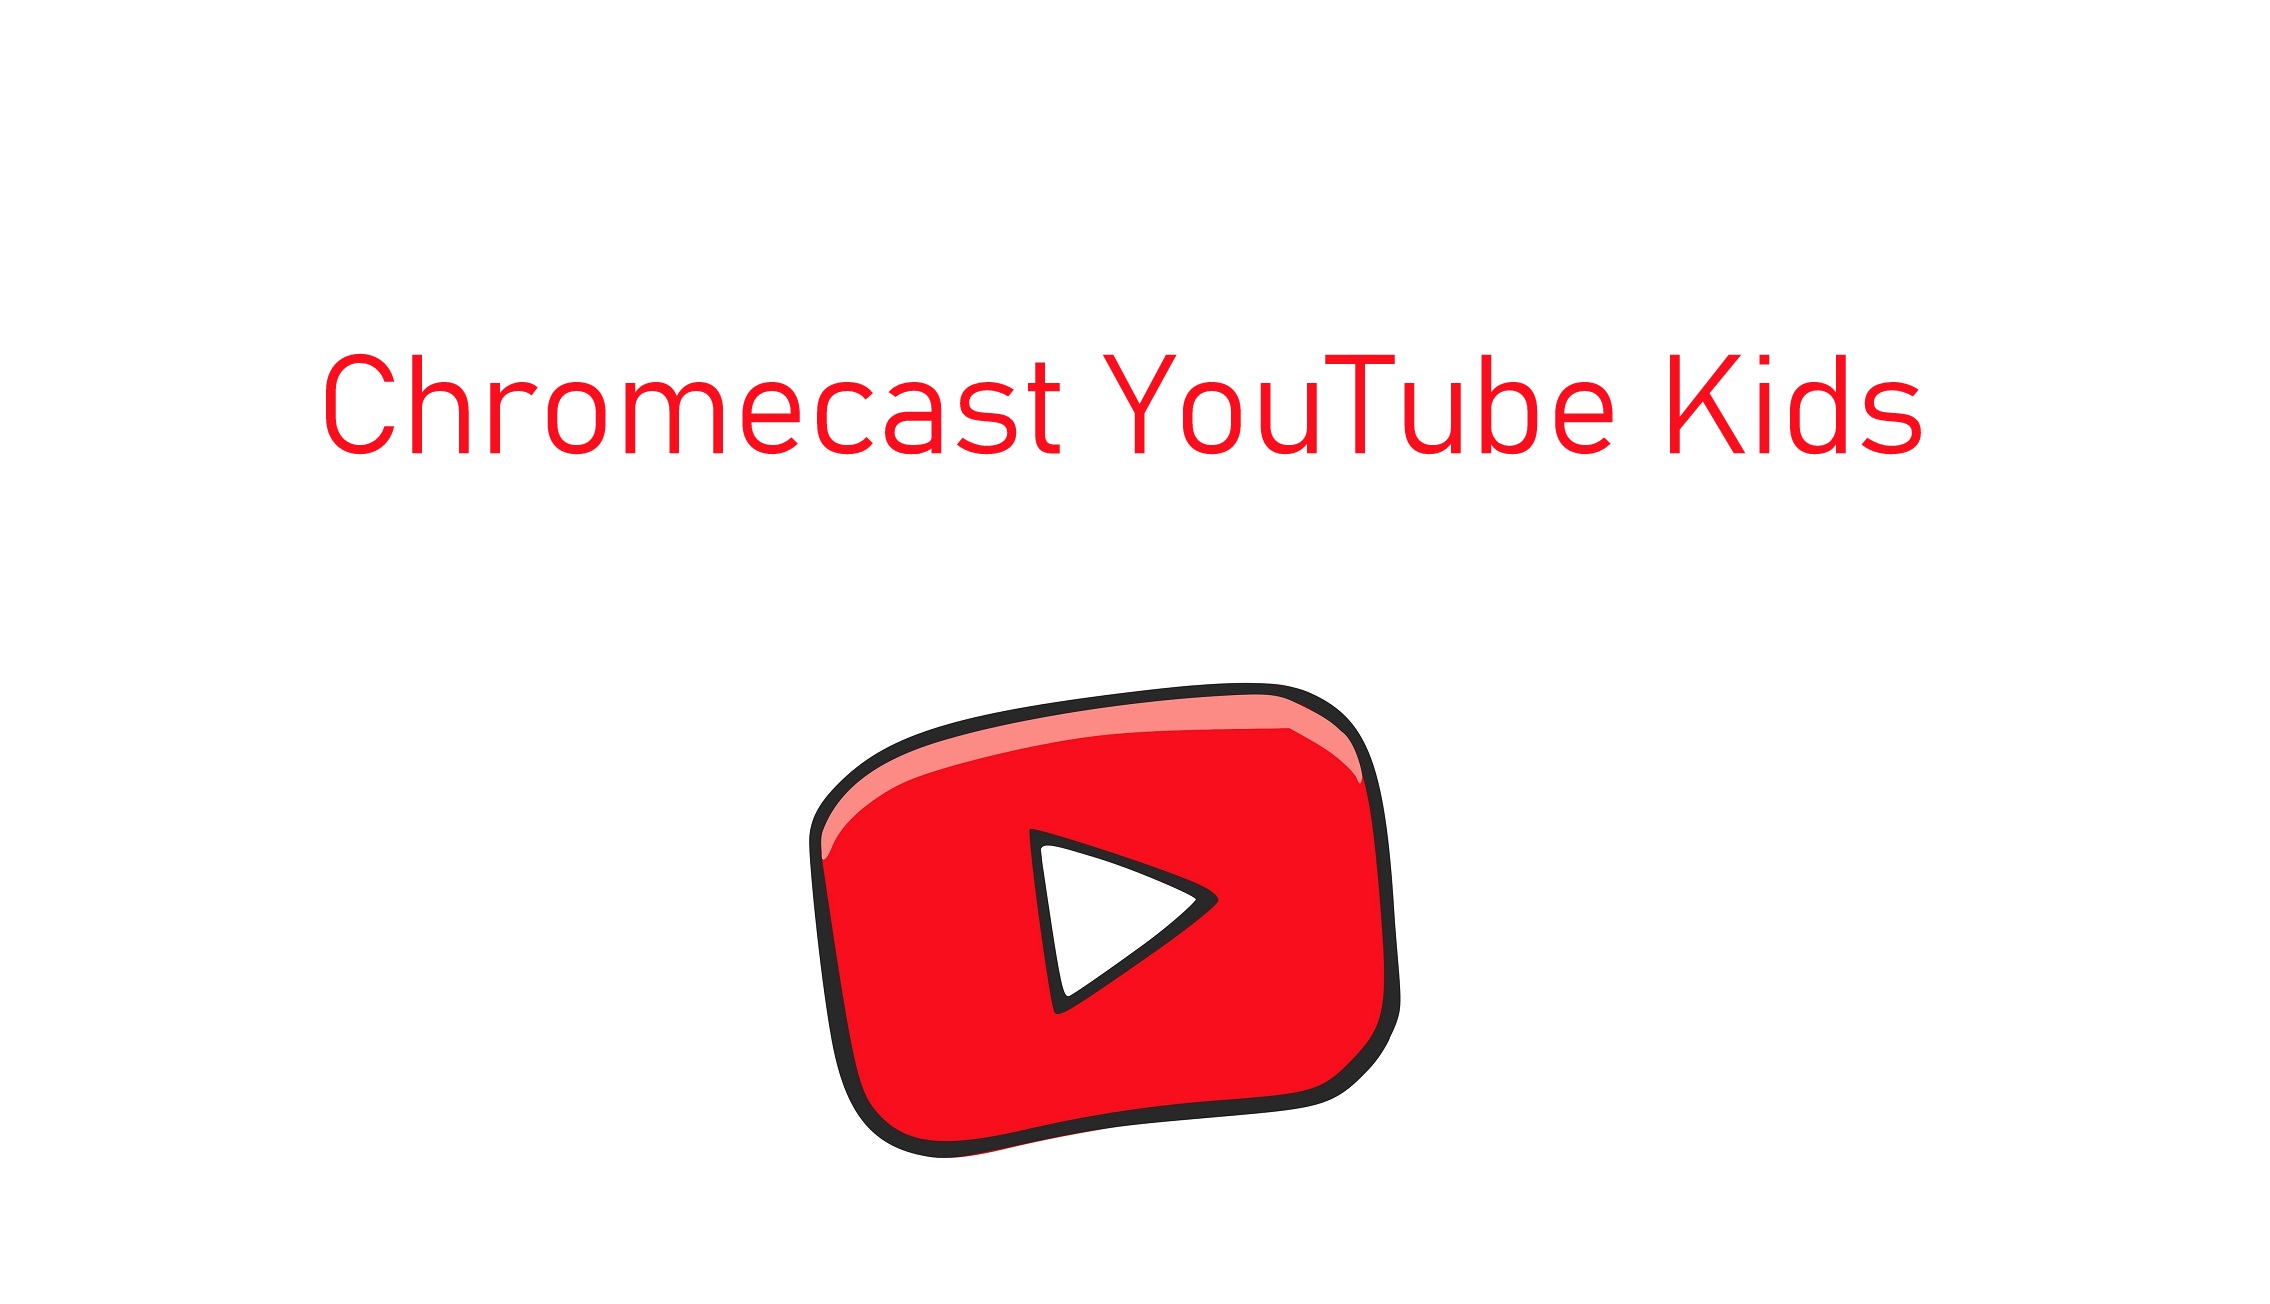 How to Chromecast YouTube Kids